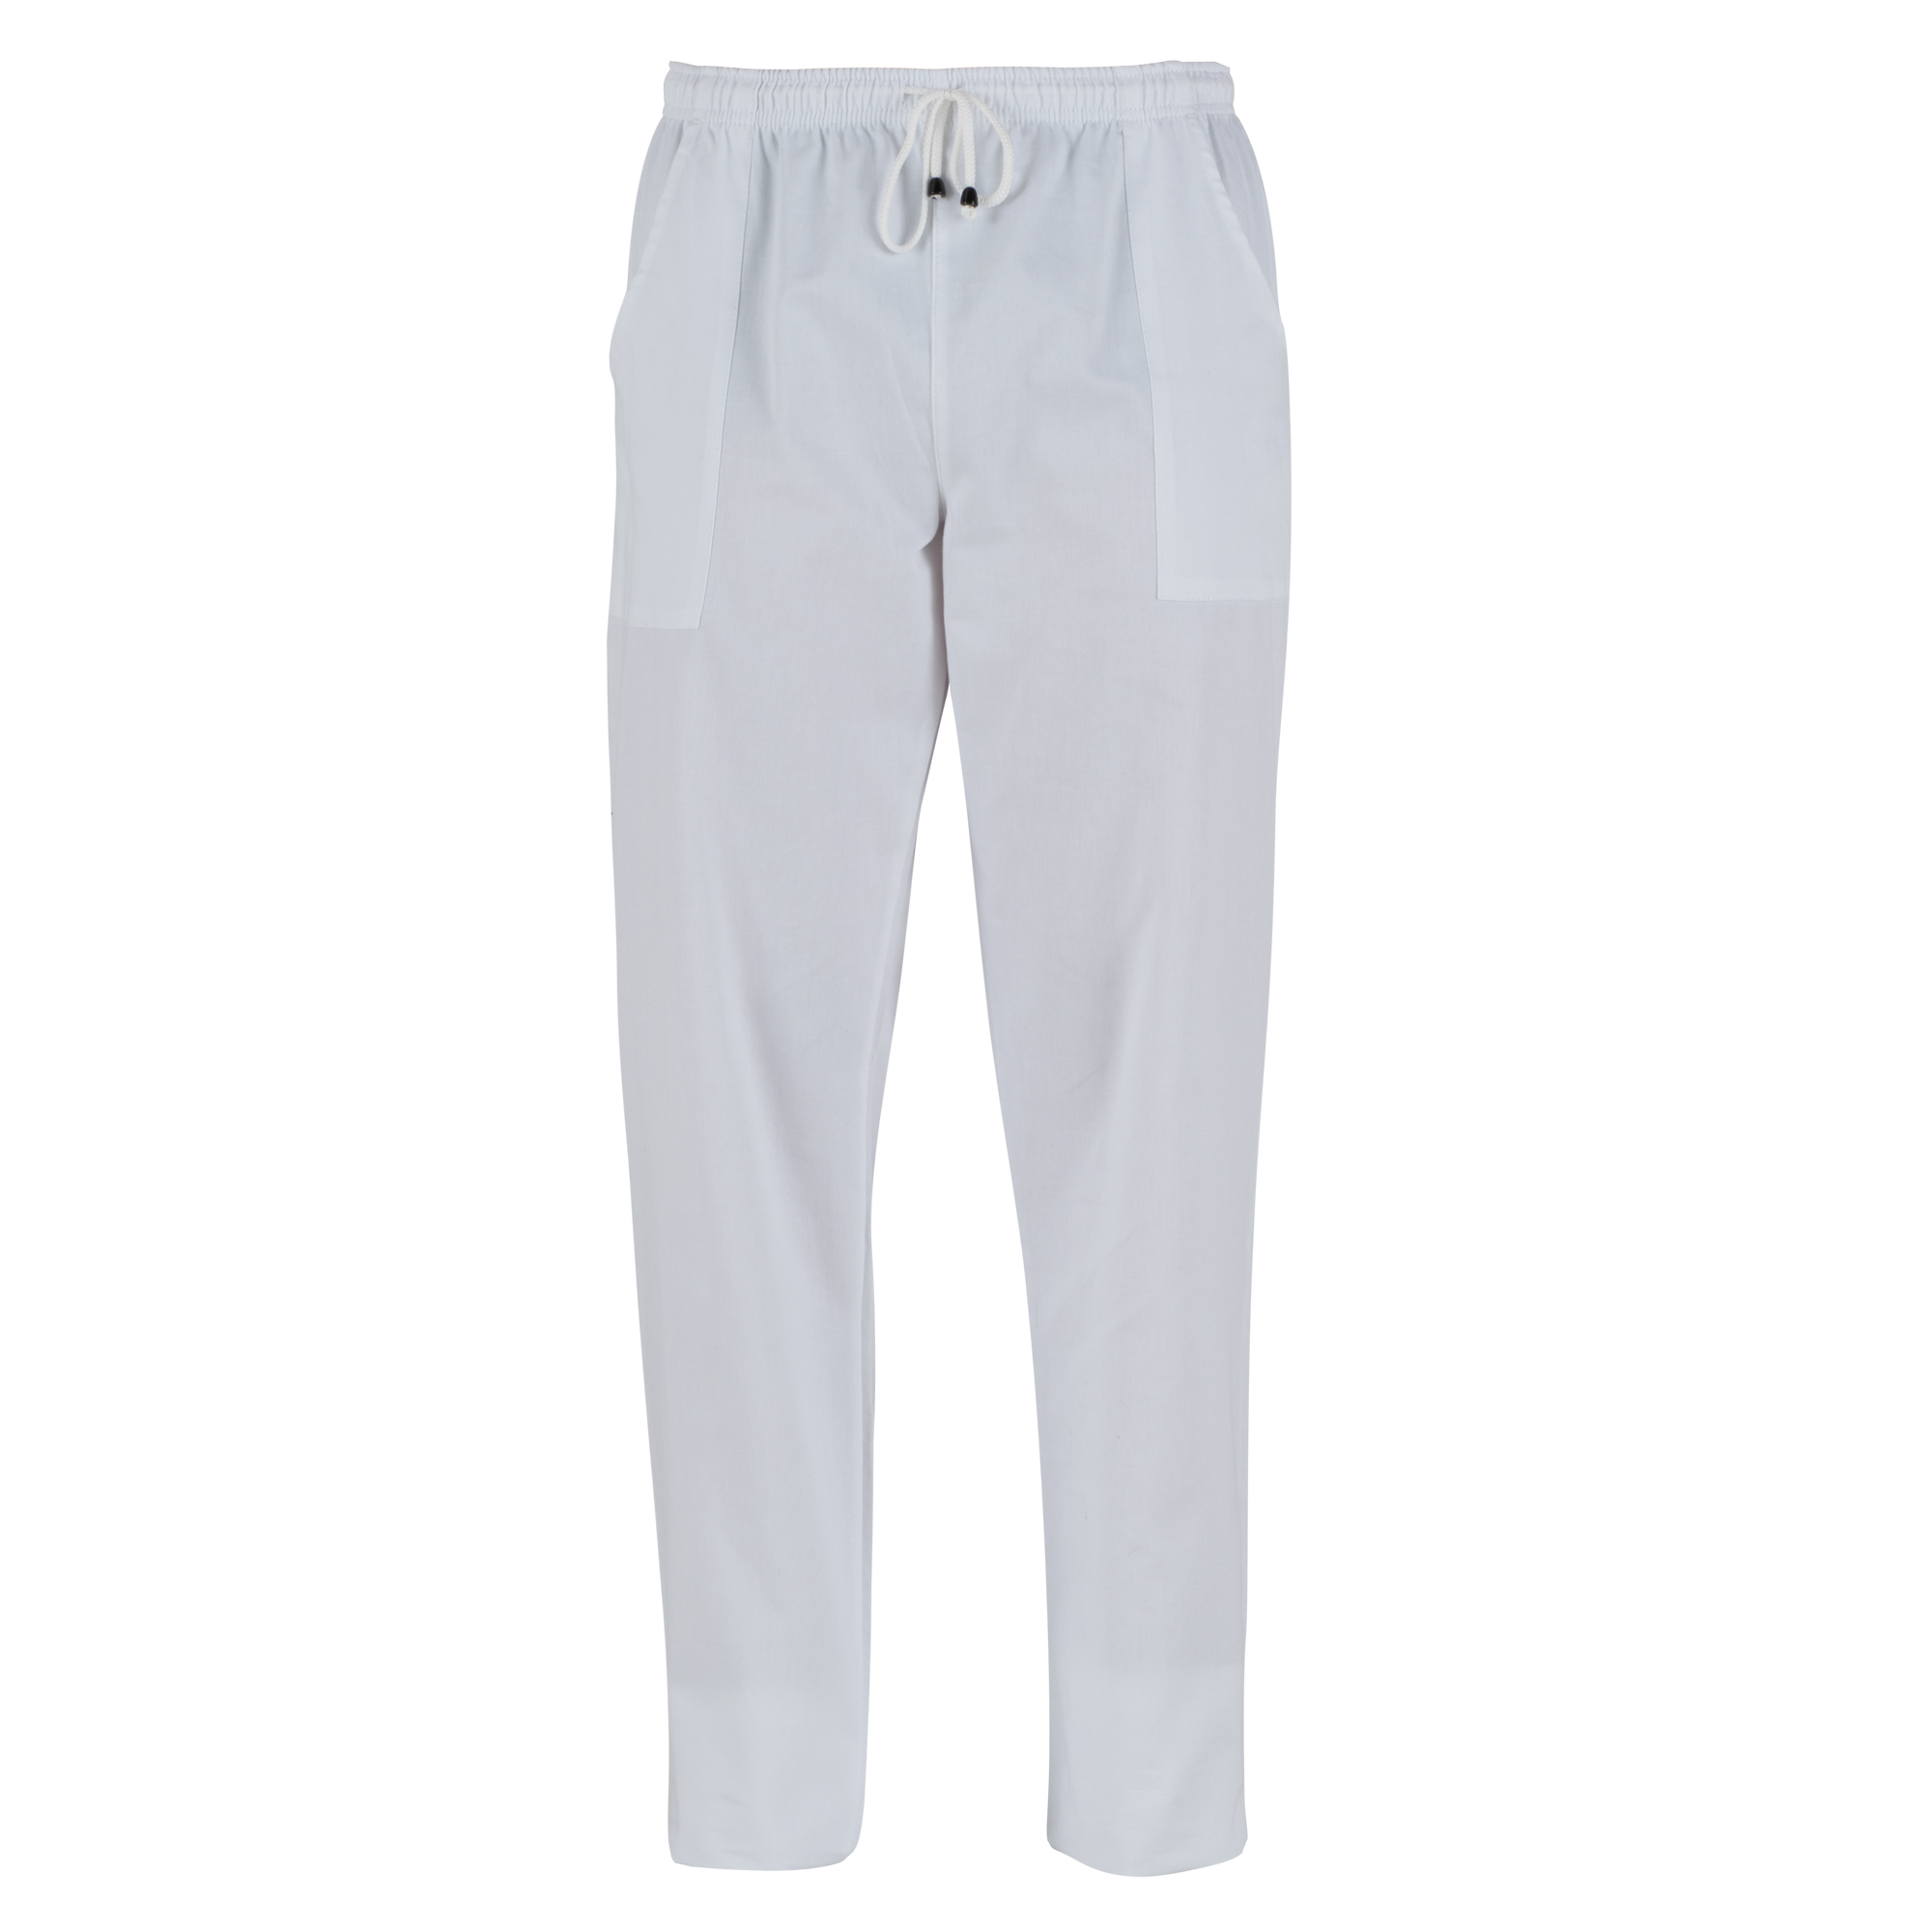 Pantalone Pitagora - unisex - 100 cotone - taglia XL - bianco - Giblor's